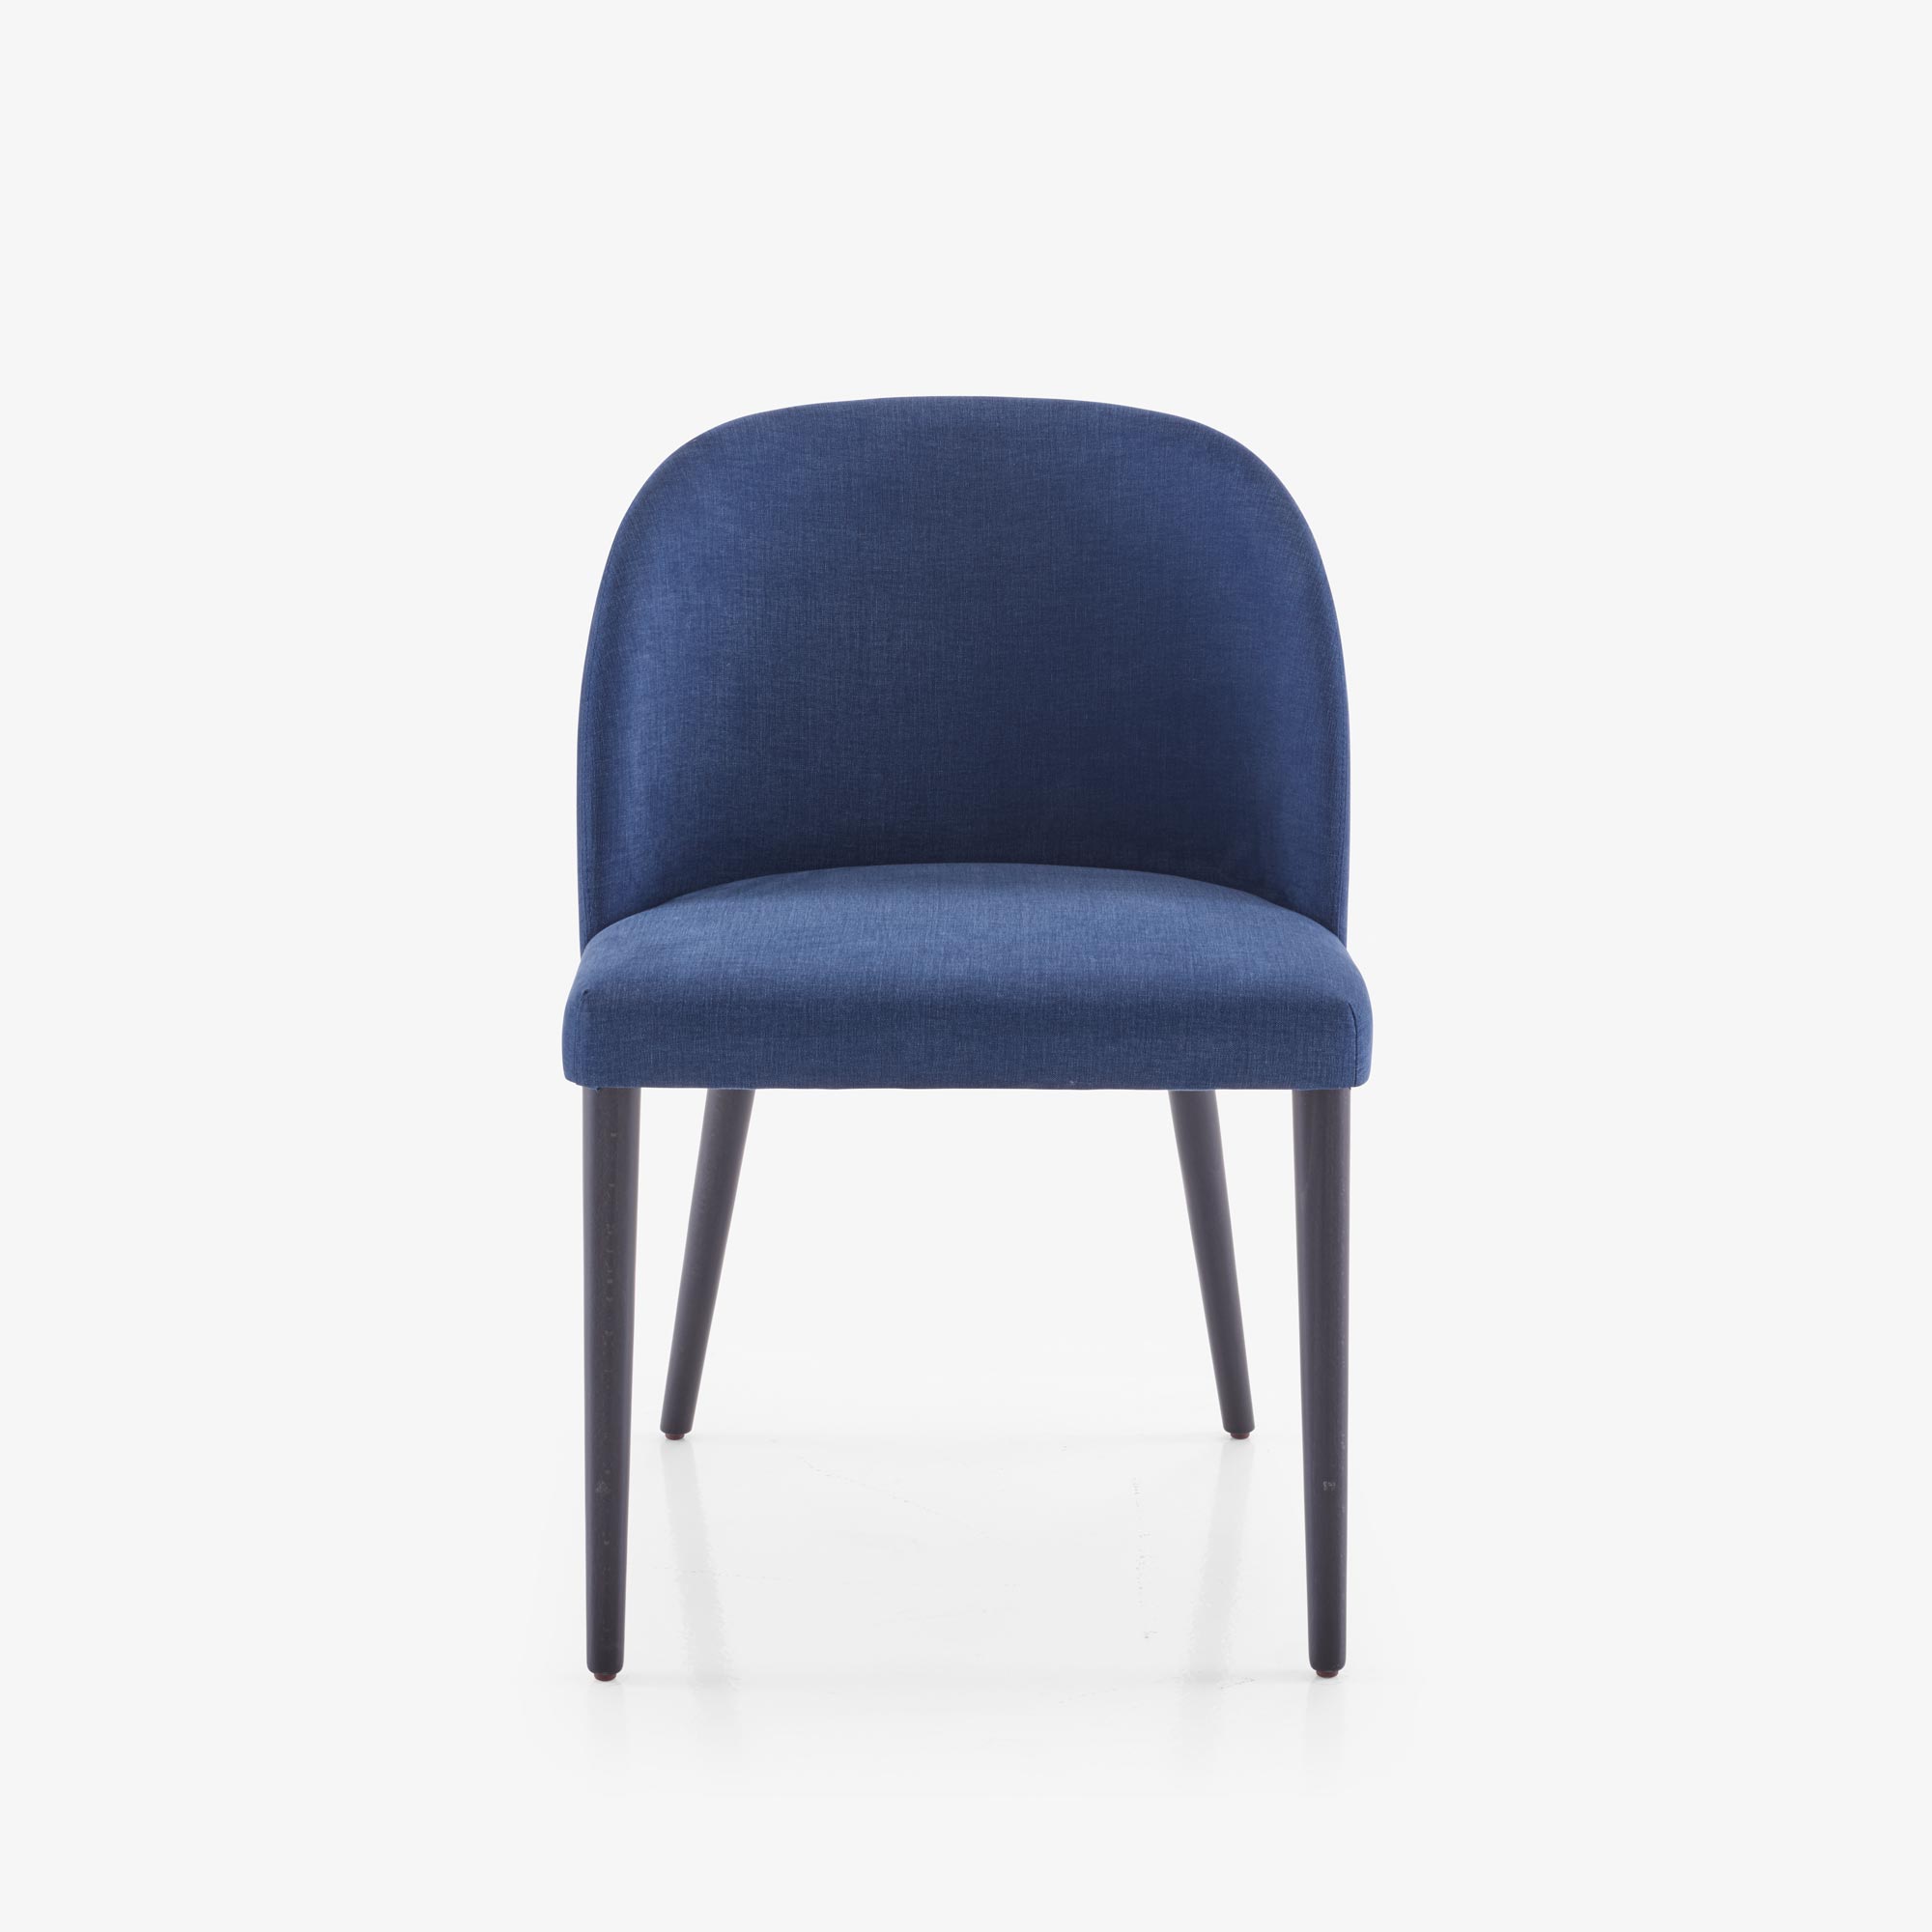 Image Chair fabric-bleu nuit (midnight blue)  1